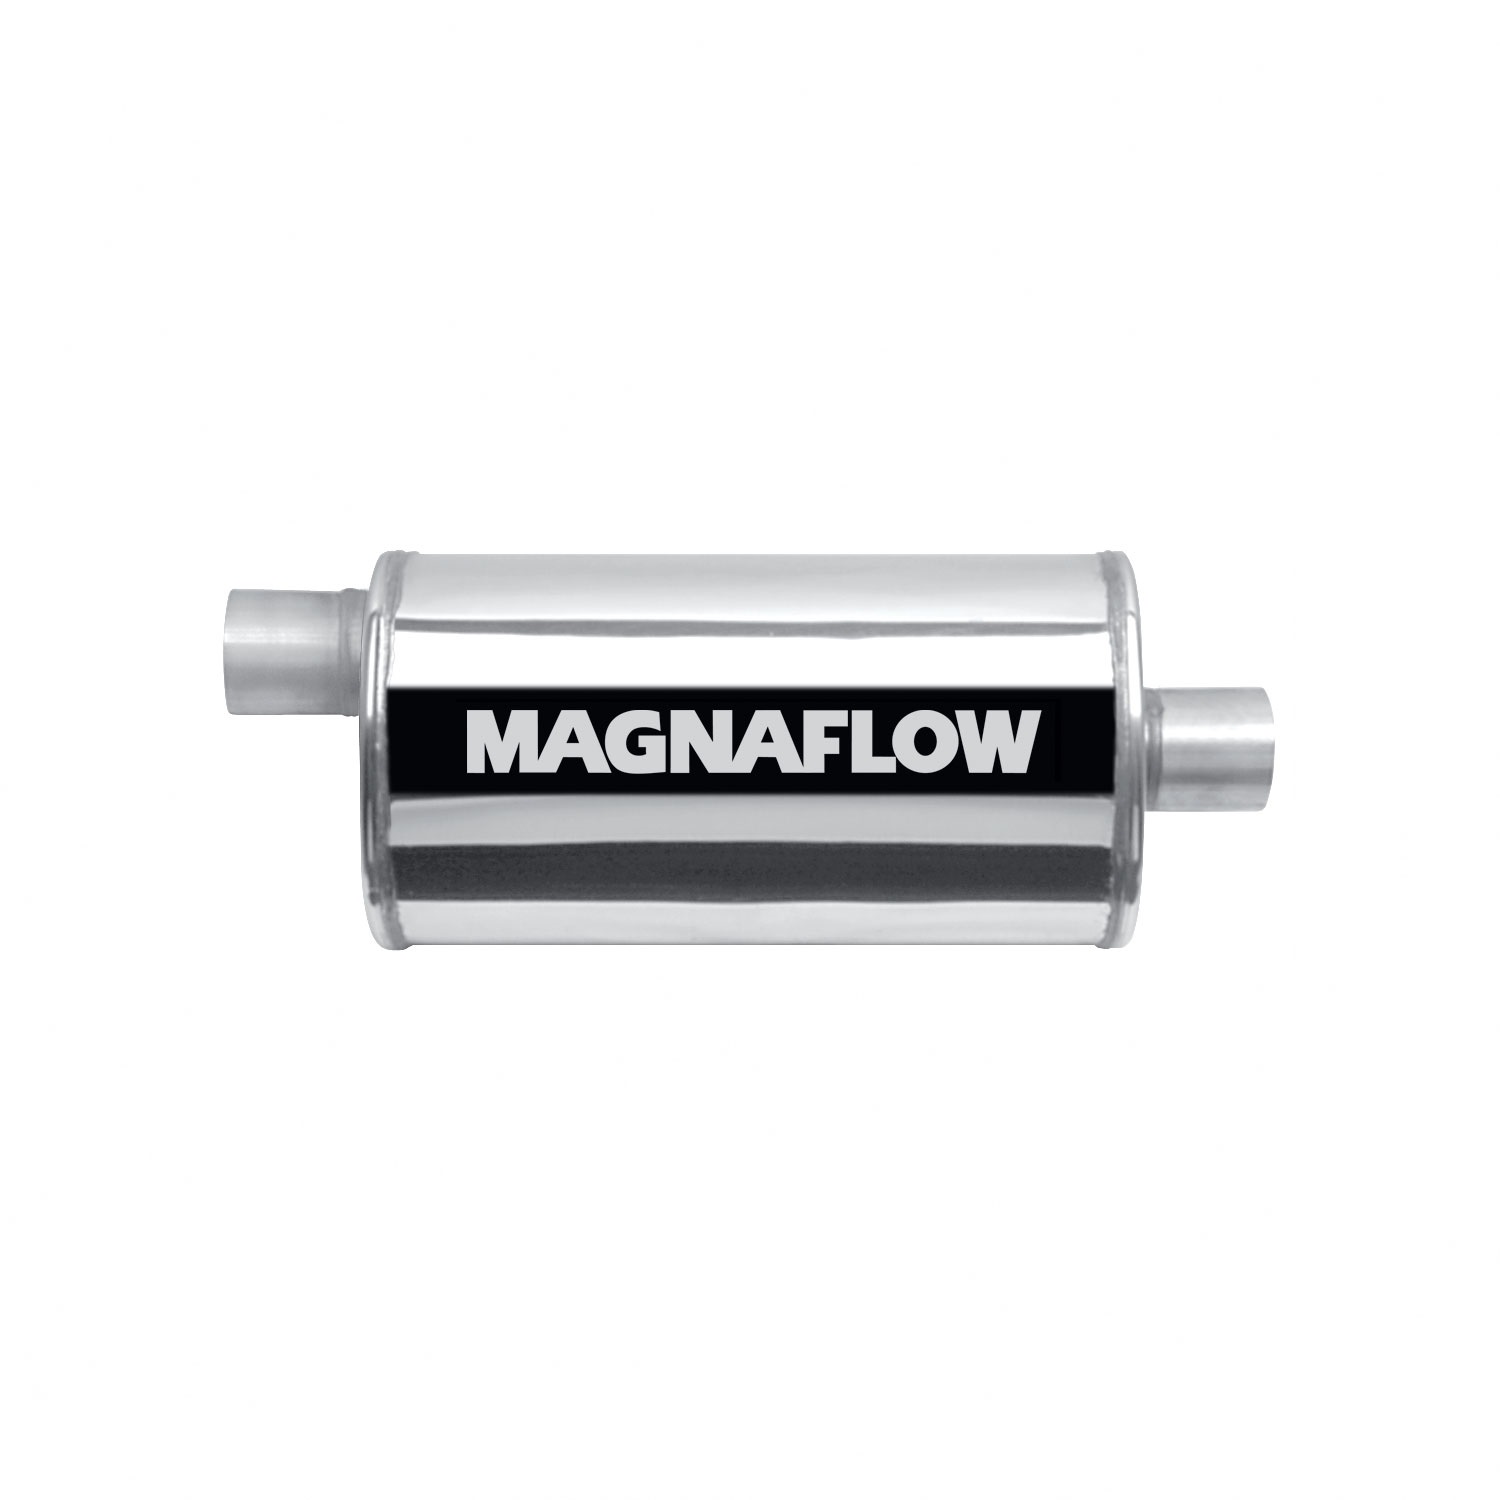 Magnaflow Performance Exhaust Magnaflow Performance Exhaust 14229 Stainless Steel Muffler